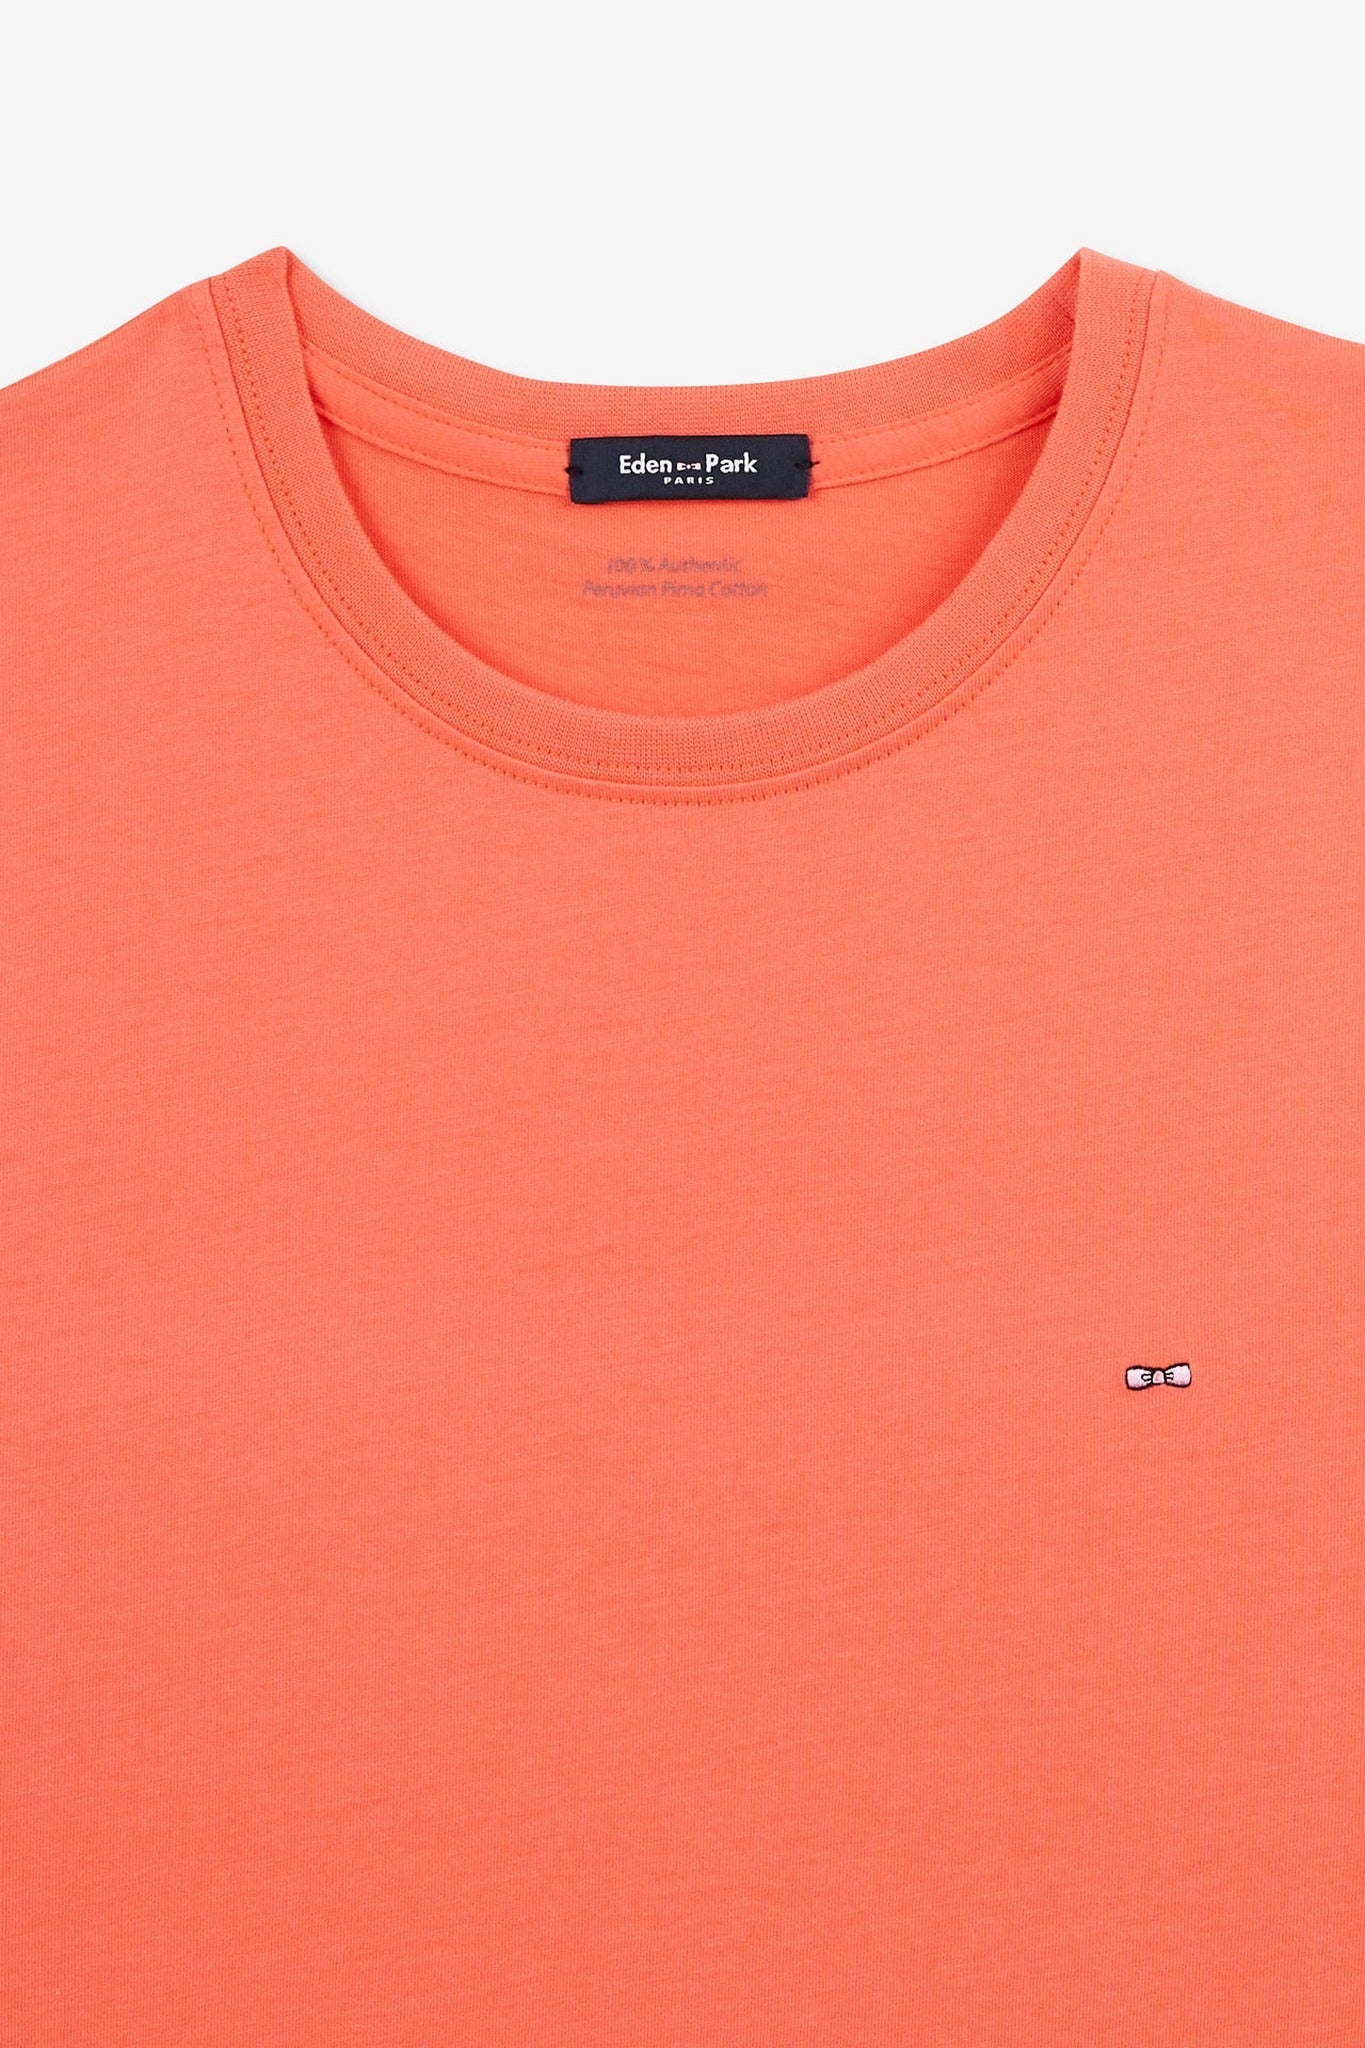 Pink short-sleeved t-shirt - Image 7